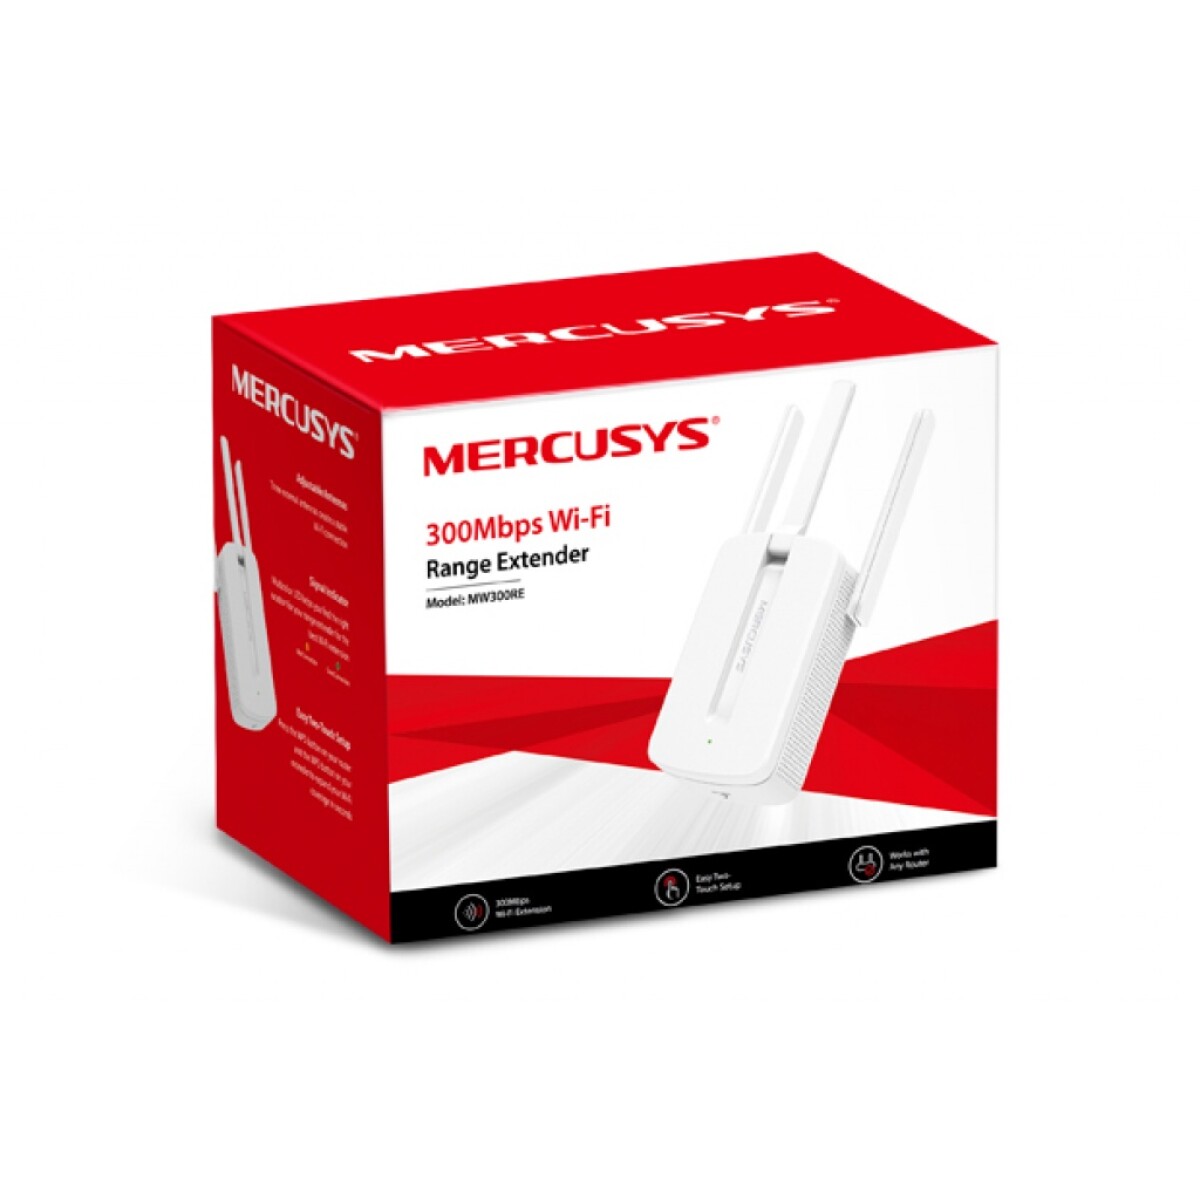 Range Extender Mercusys 300Mbps Wi-Fi MW300RE - Unica 